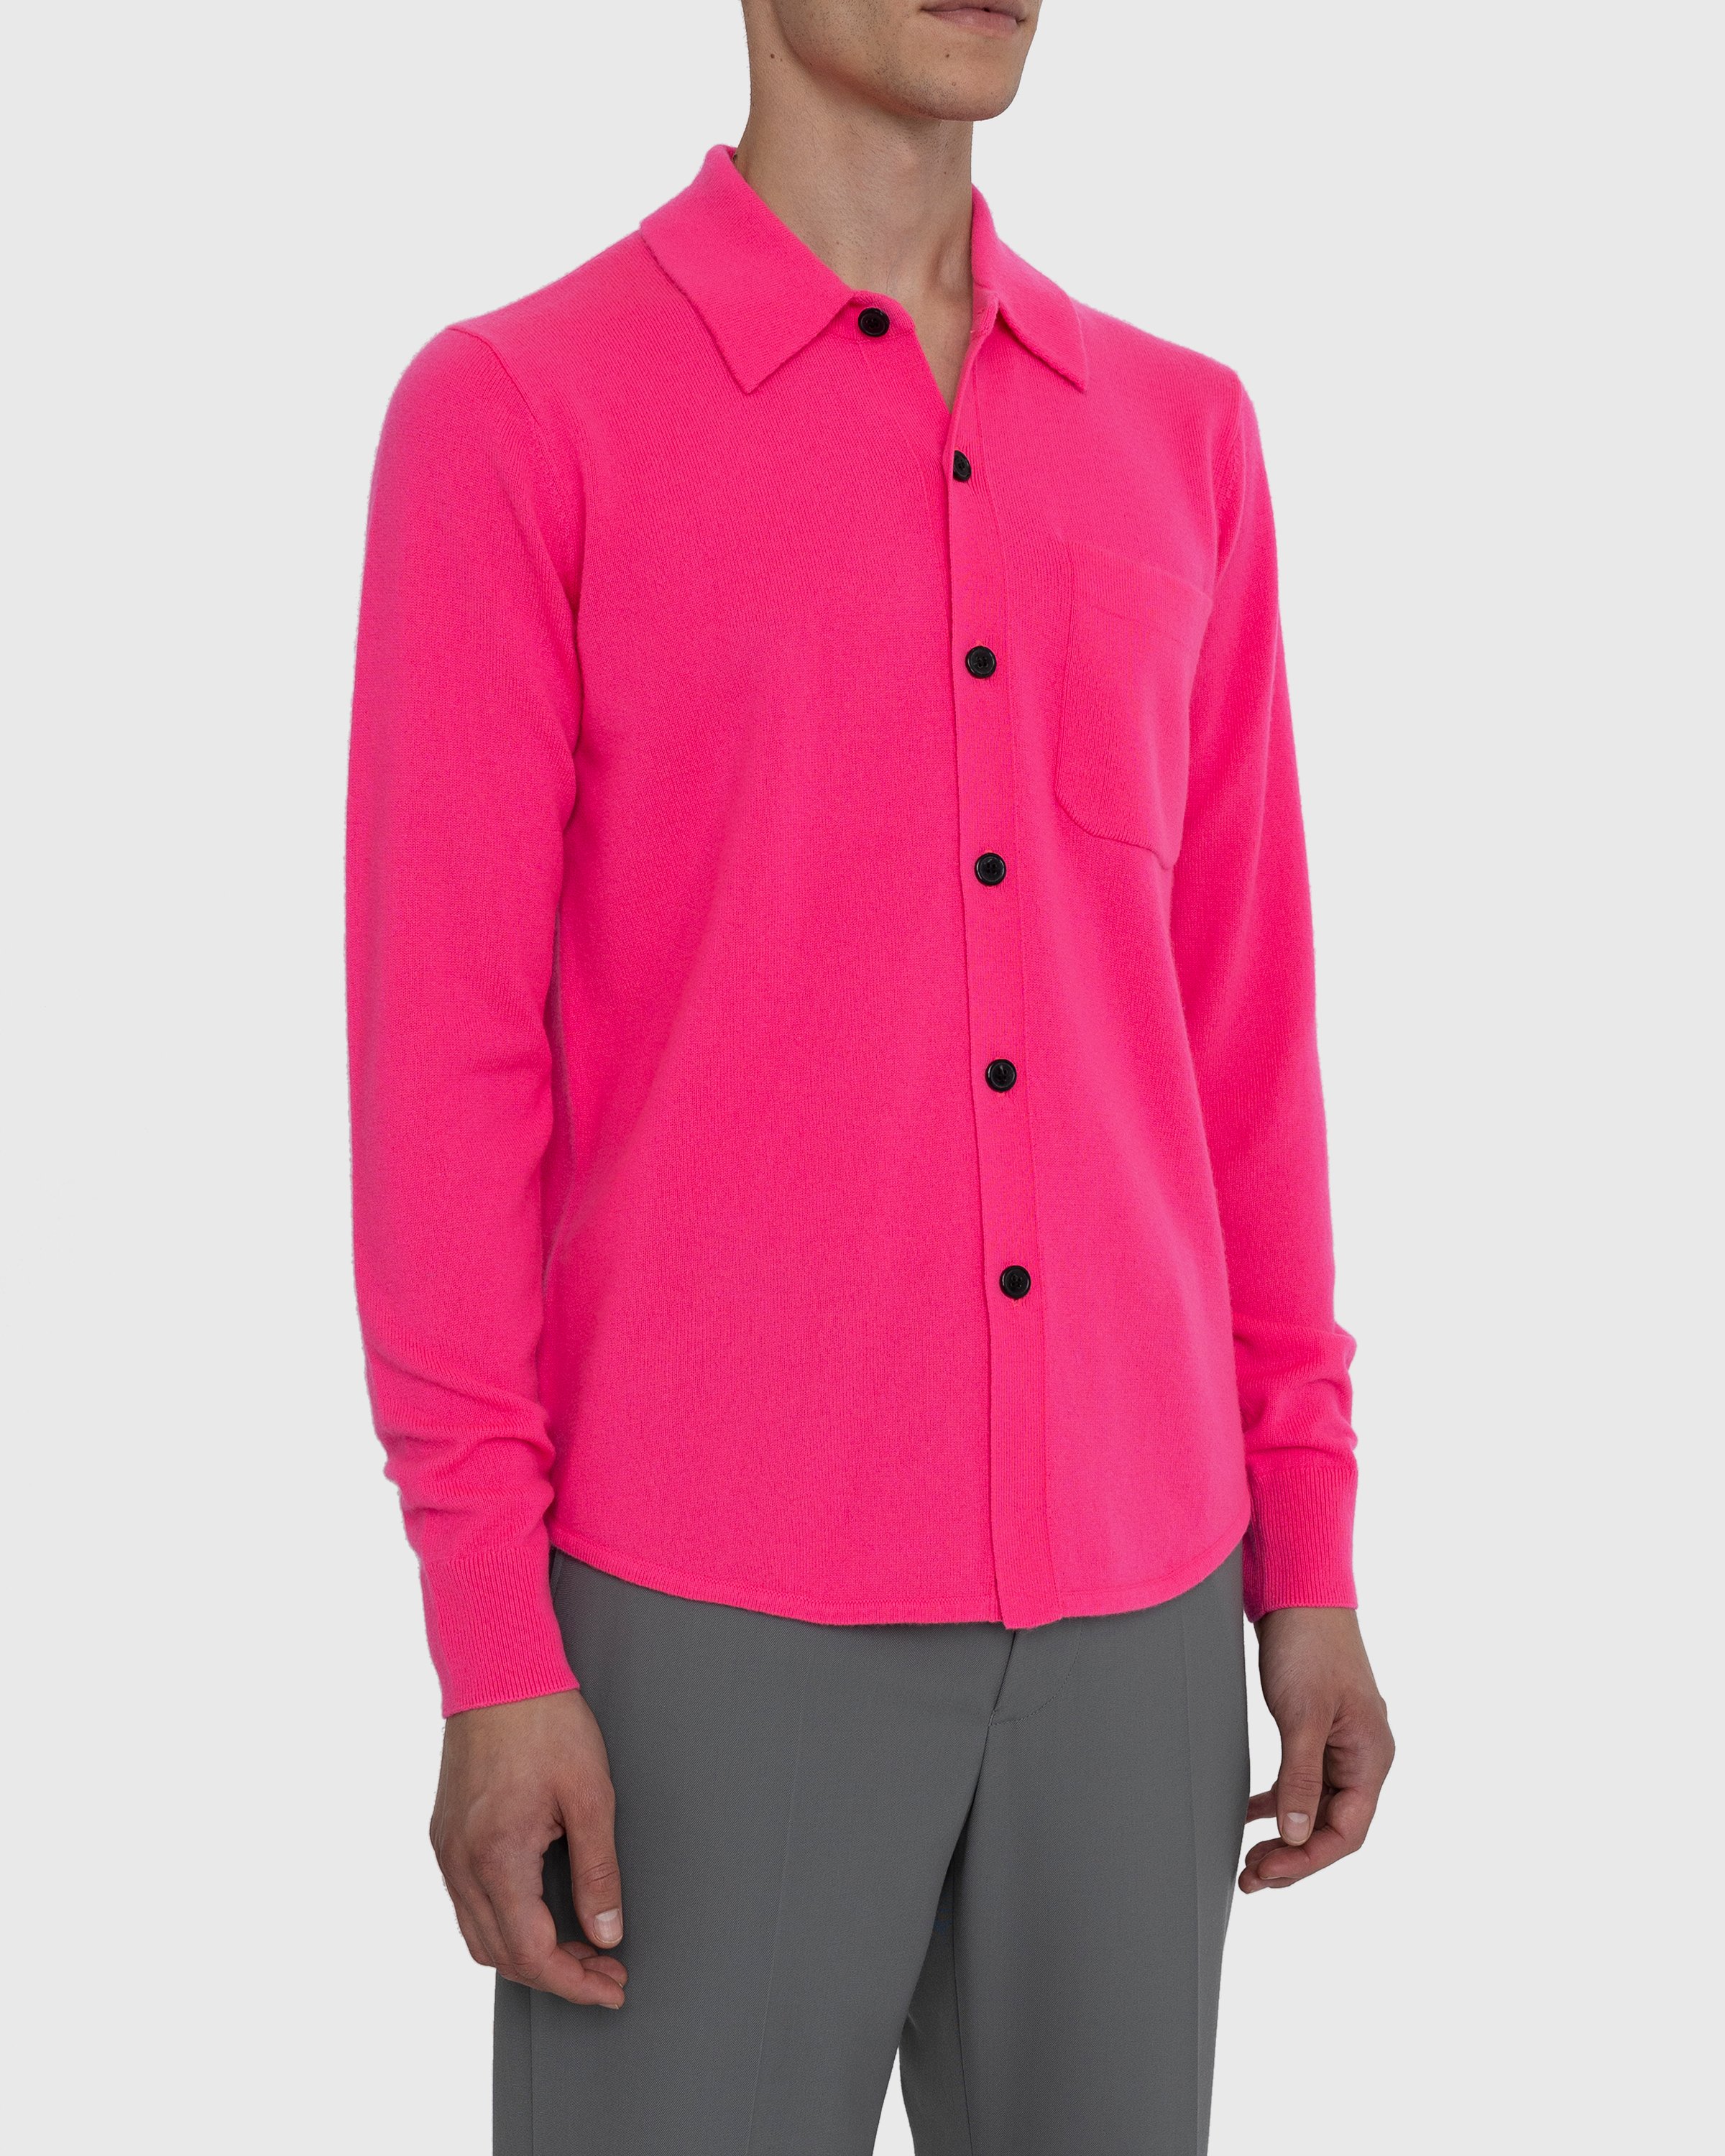 Dries van Noten - Never Cardigan - Clothing - Pink - Image 3